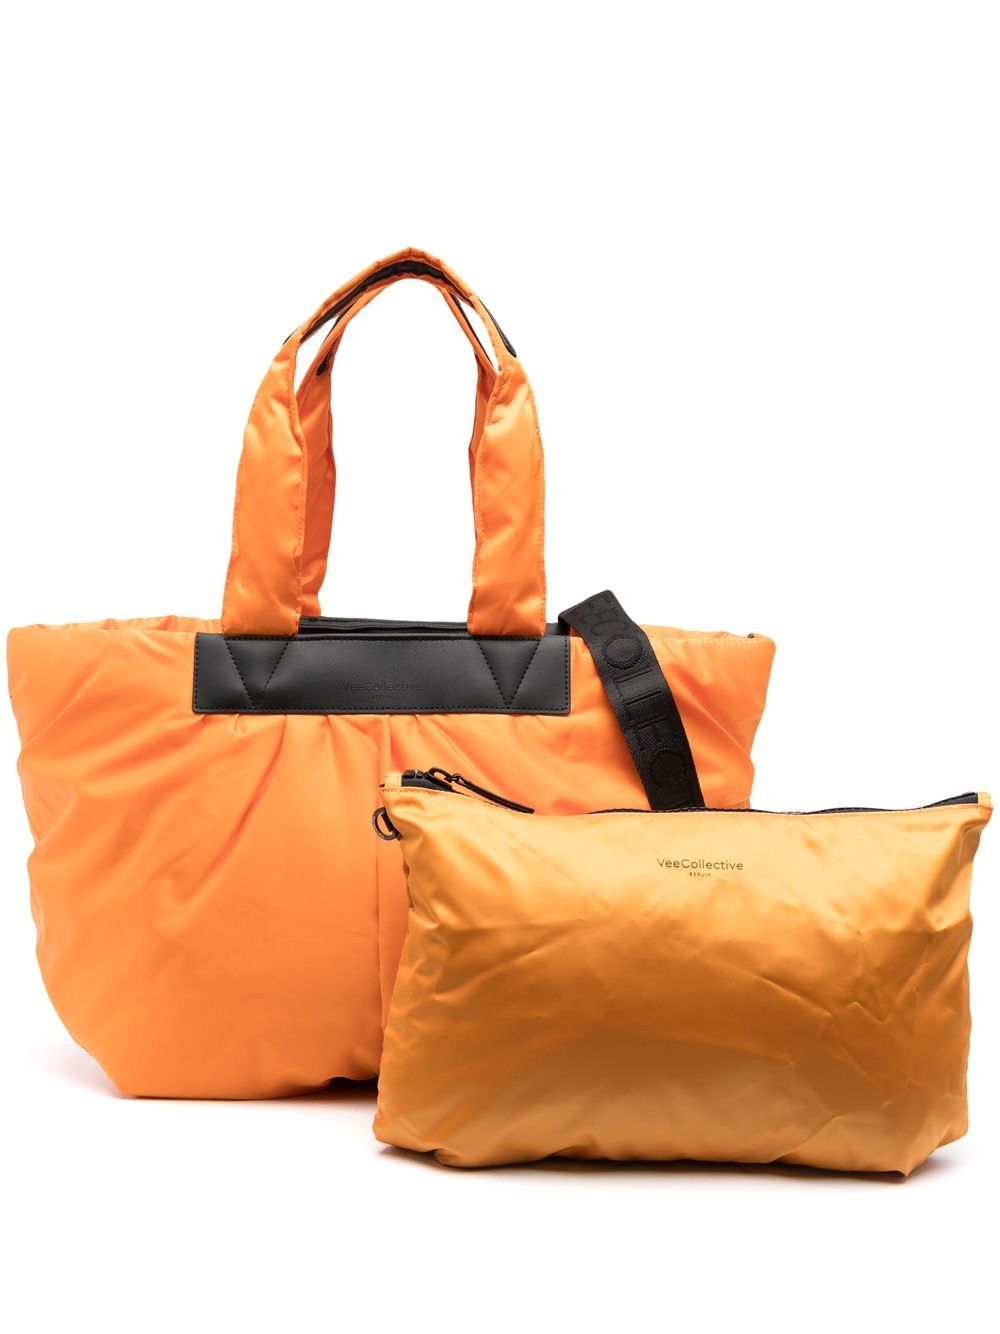 Veecollective Caba Shopper Tote Bag In Orange